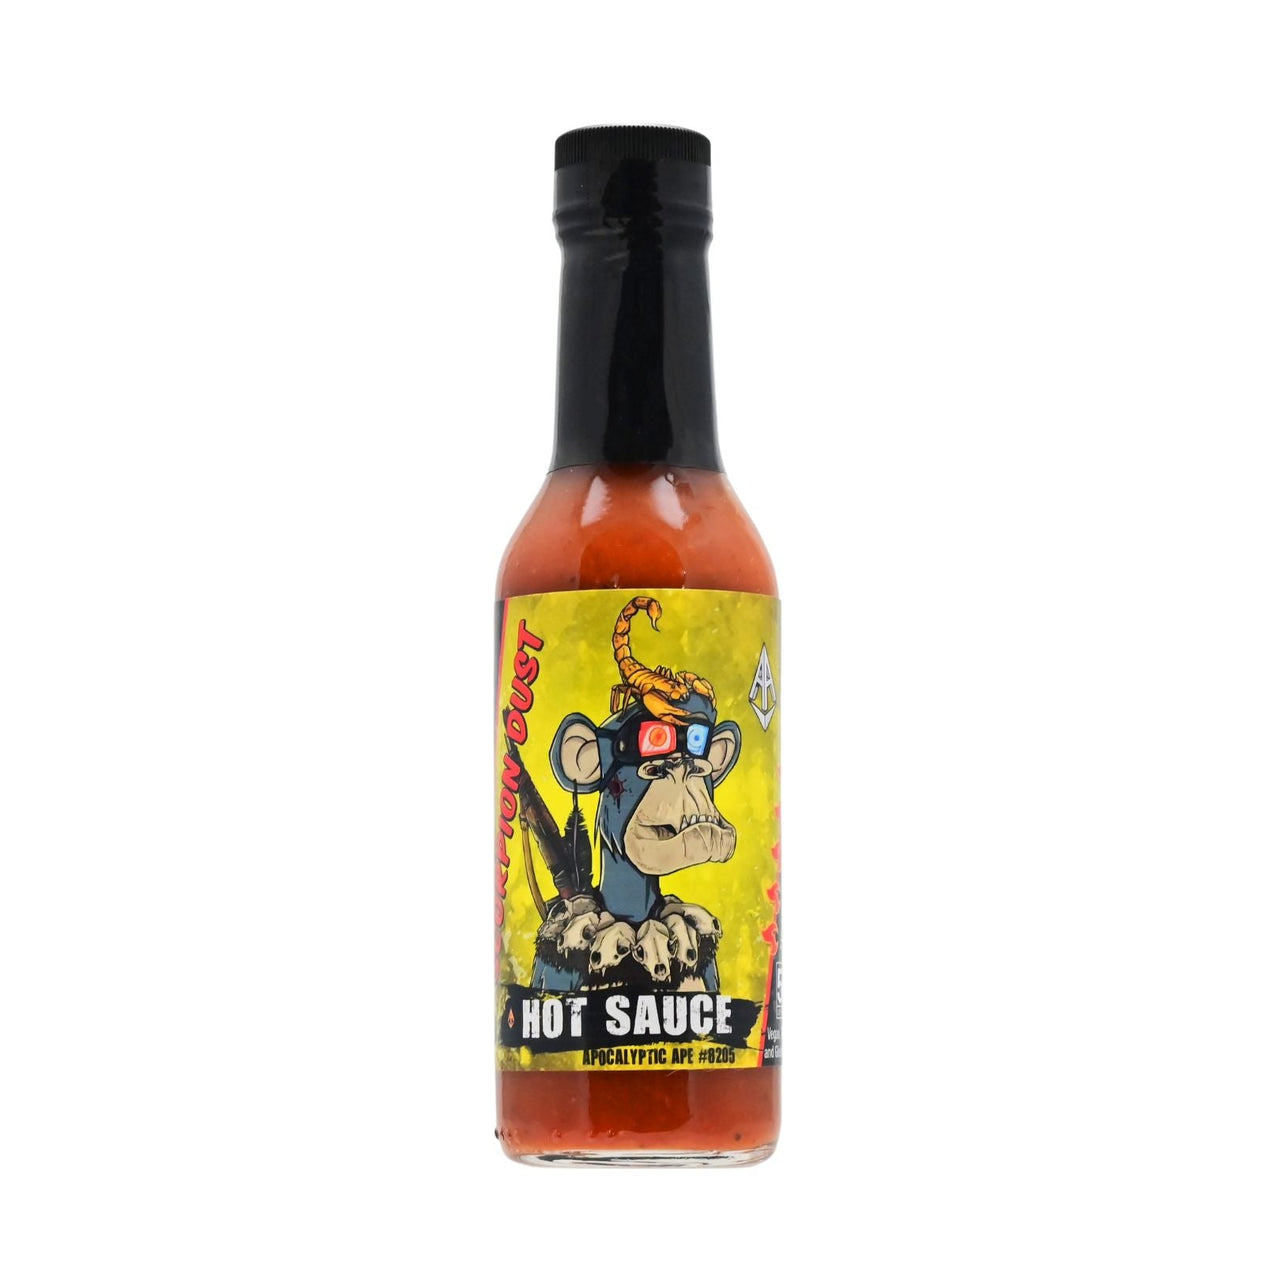 Apocalyptic Ape #8205 Scorpion Dust Hot Sauce